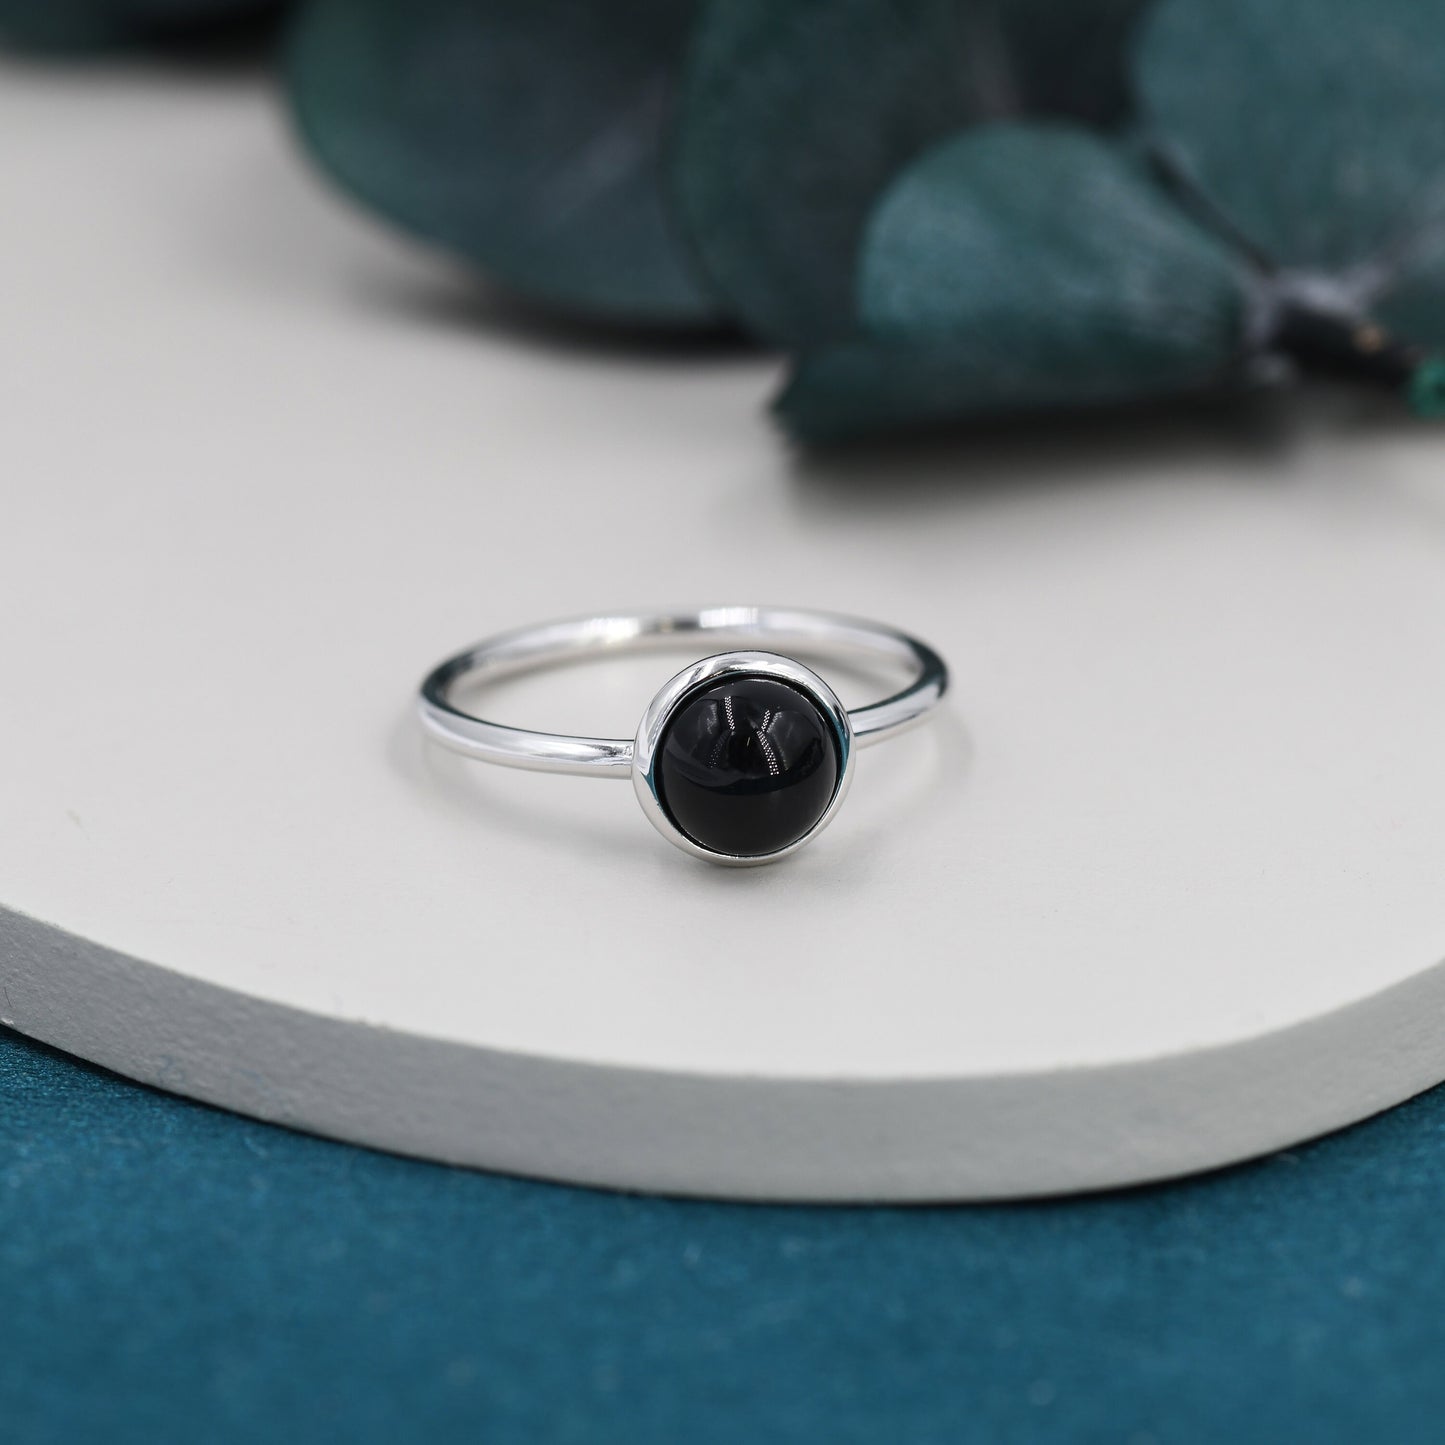 Genuine Black Onyx Ring in Sterling Silver, US 5 - 8, Natural Black Onyx Ring, 6mm Black Onyx Ring